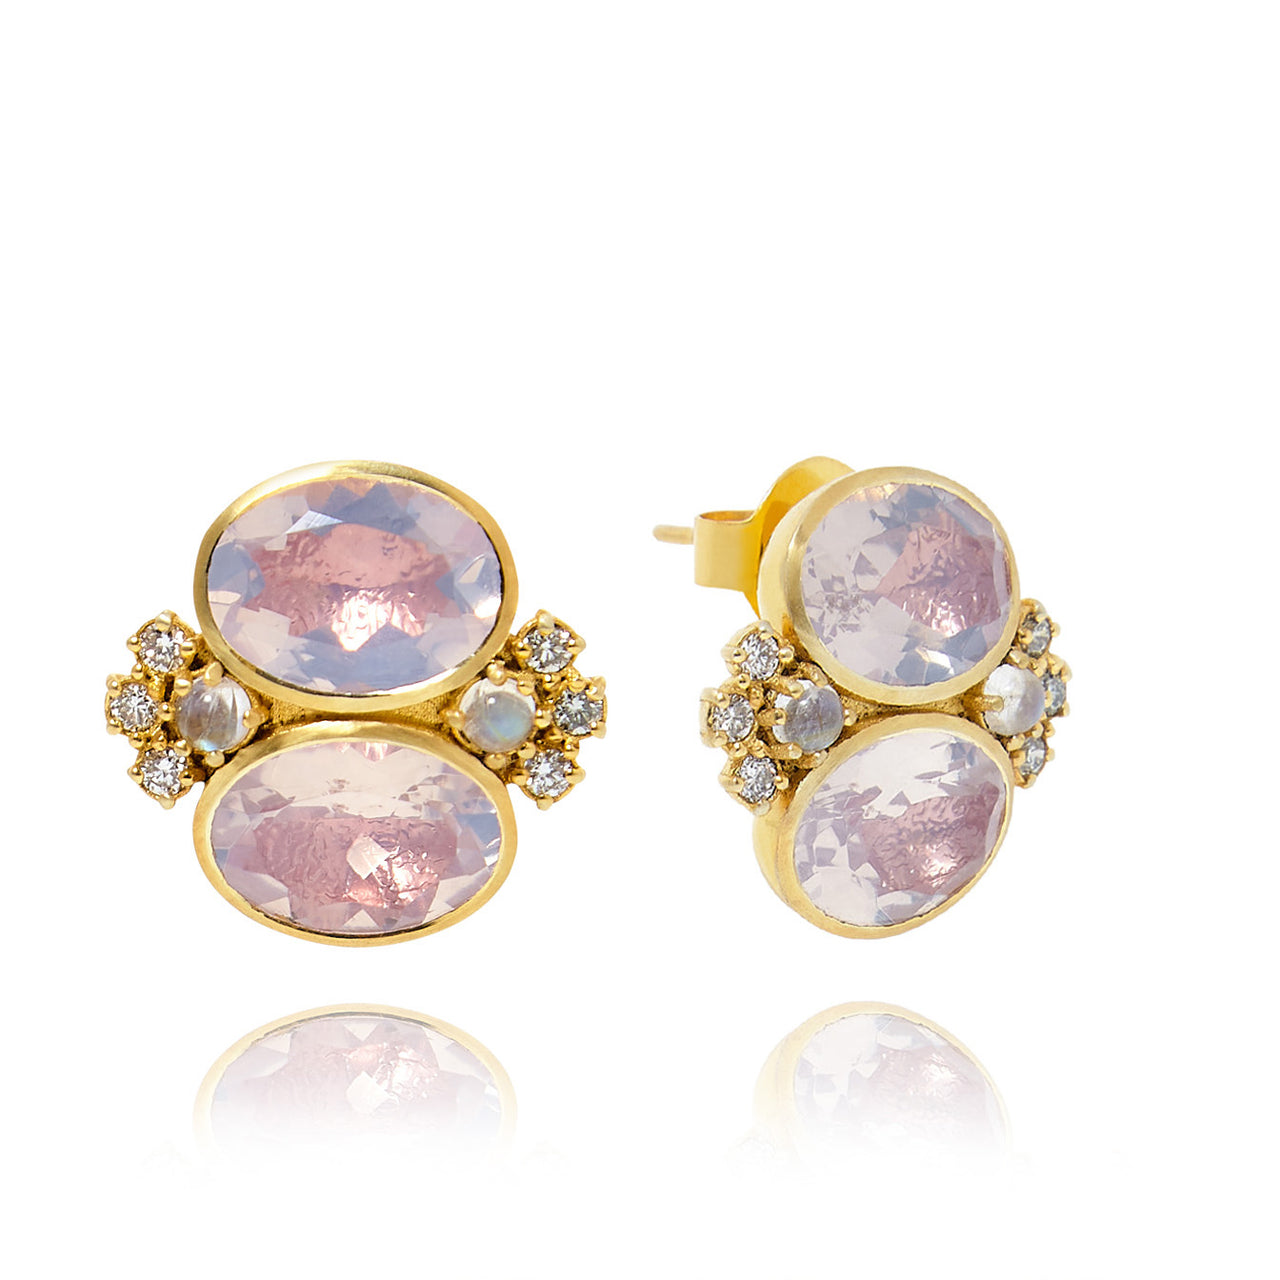 Luzia Dama Cluster Earrings in Lavender Moon Quartz & 14k Gold